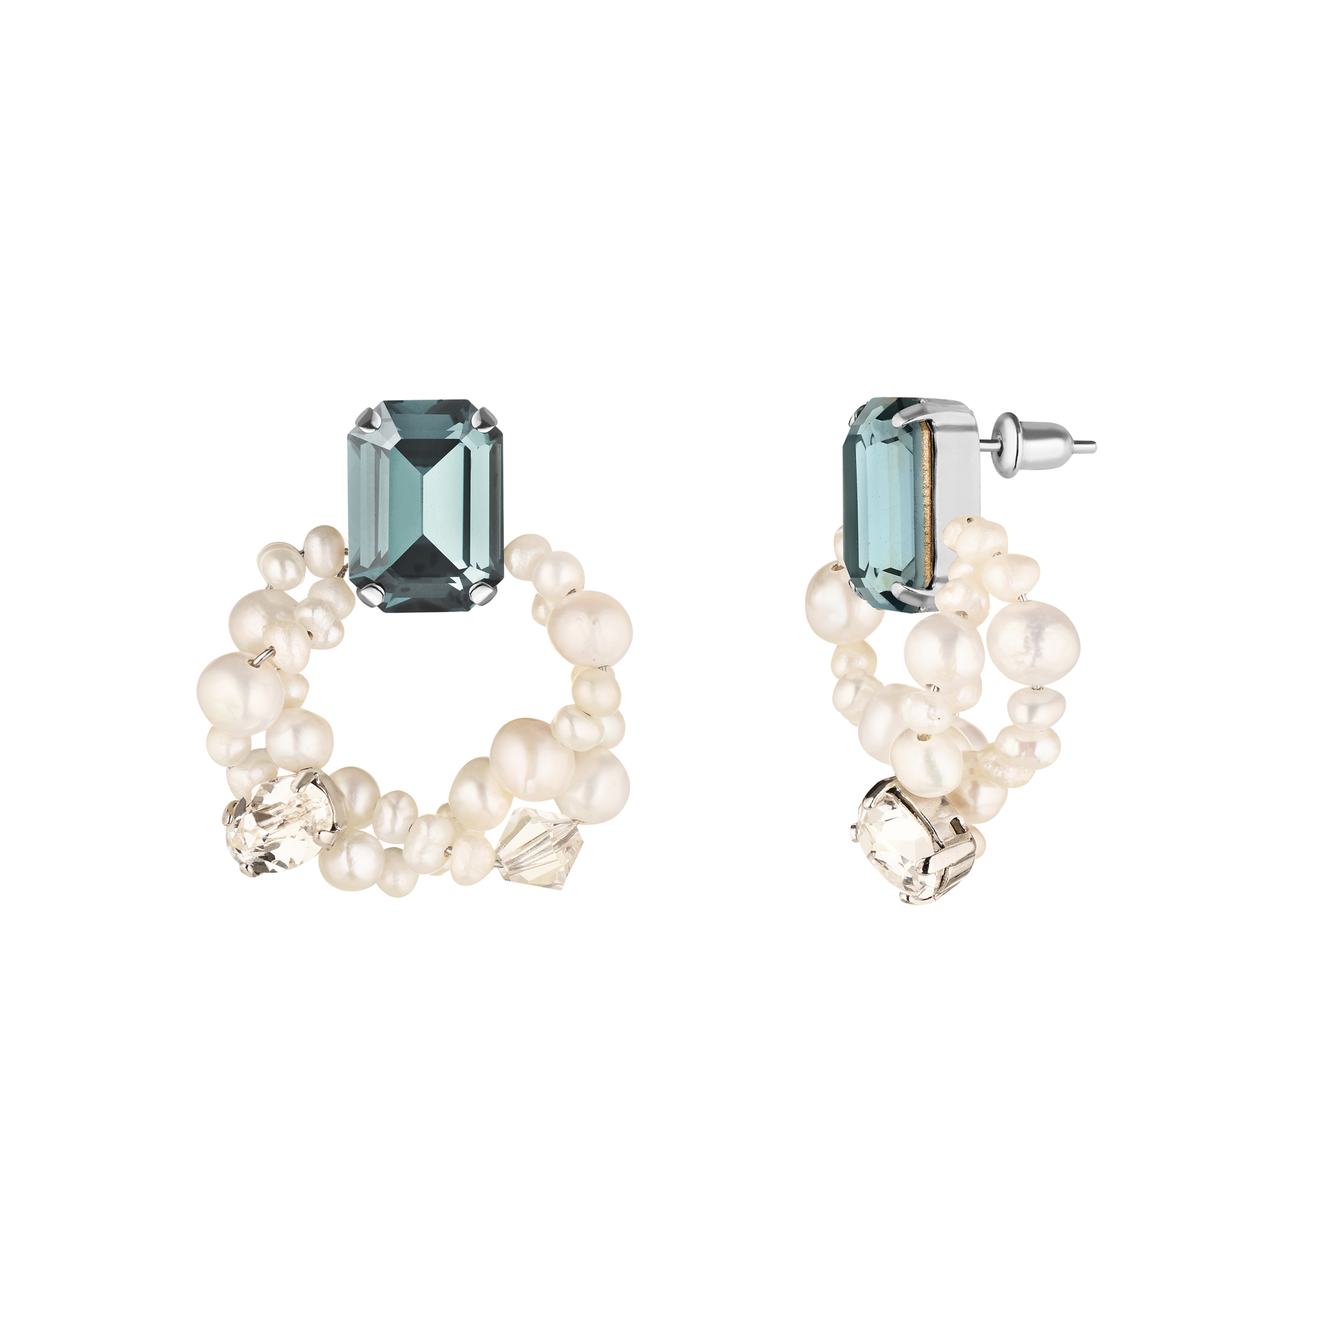 Phenomenal Studio Родированные серьги с кристаллами и речным жемчугом Indian Pearl phenomenal studio серьги с жемчугом aqumarine earrings